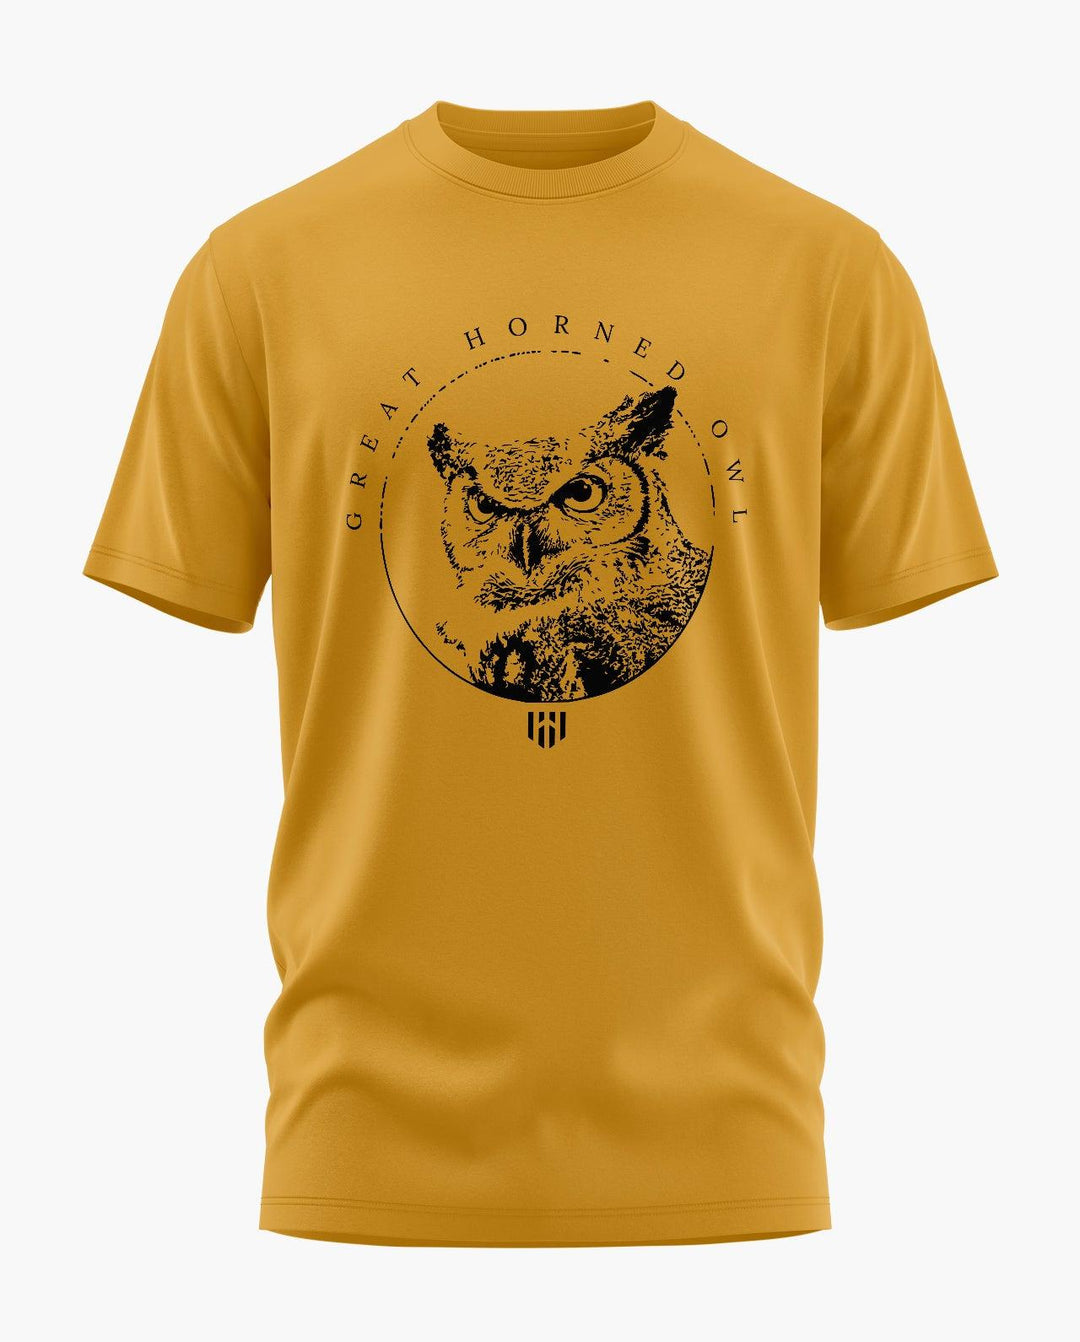 GREAT HORNED OWL T-Shirt - Aero Armour